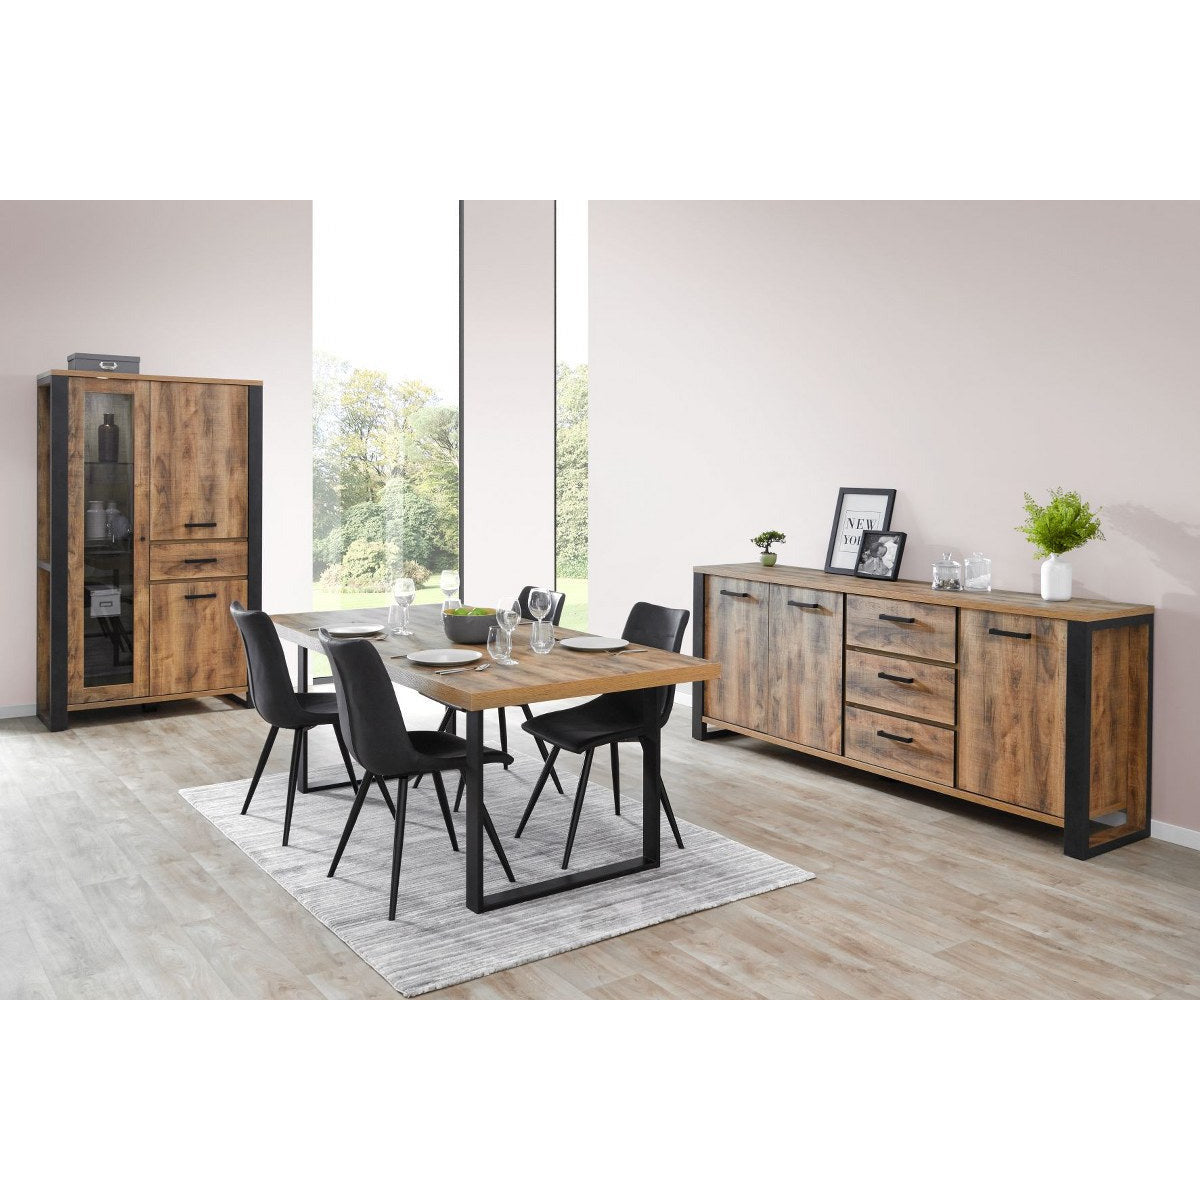 Dresser | Furniture series tremolo | brown, black | 225x48x